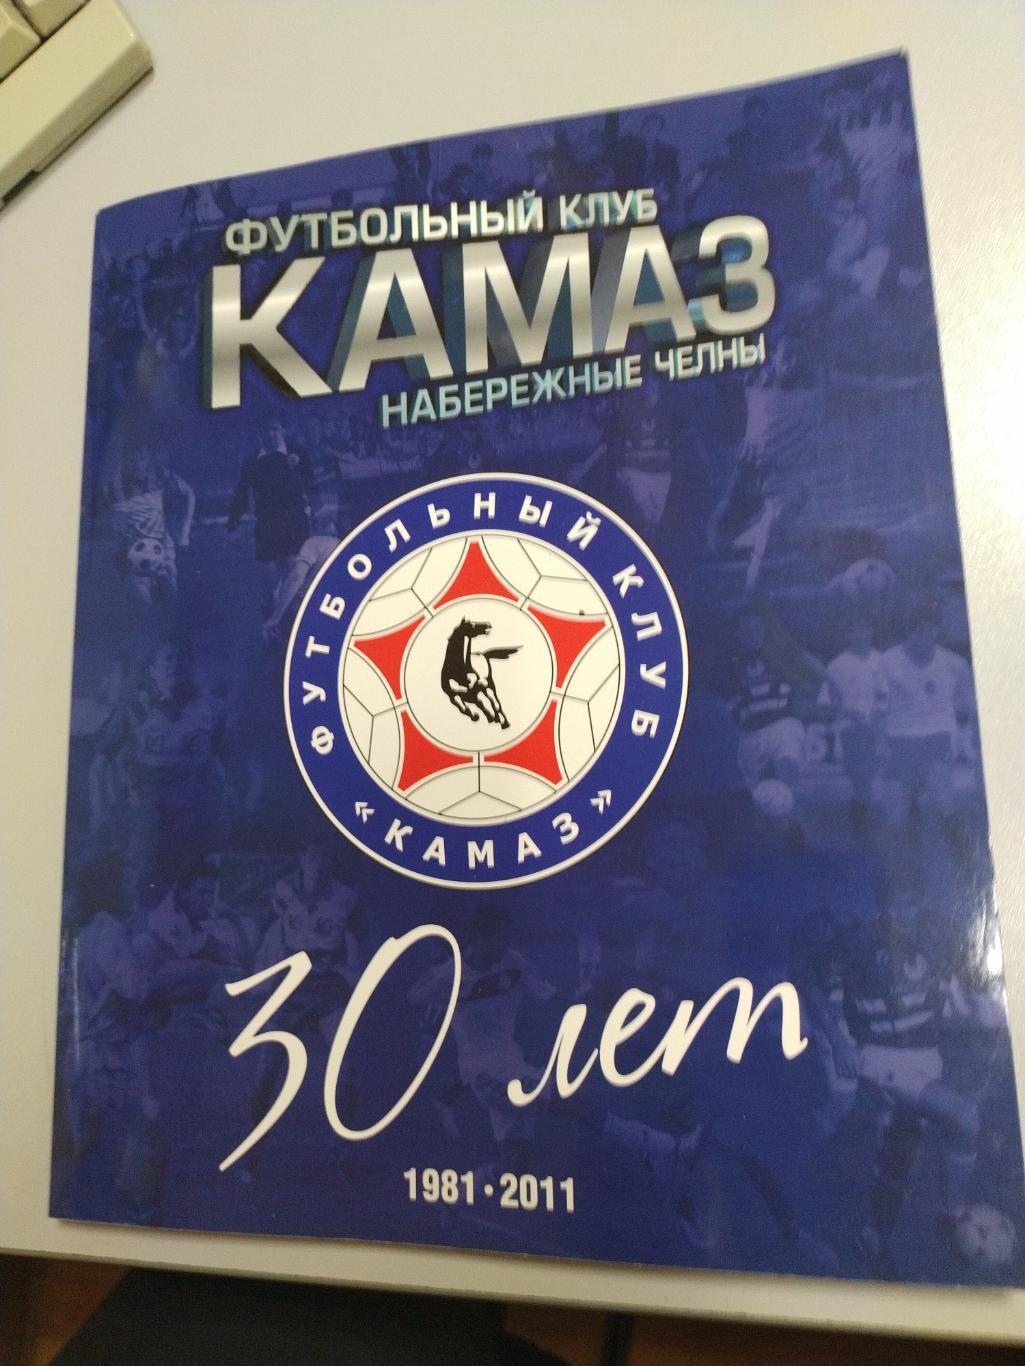 Календарь справочник по футболу КАМАЗ 30 лет